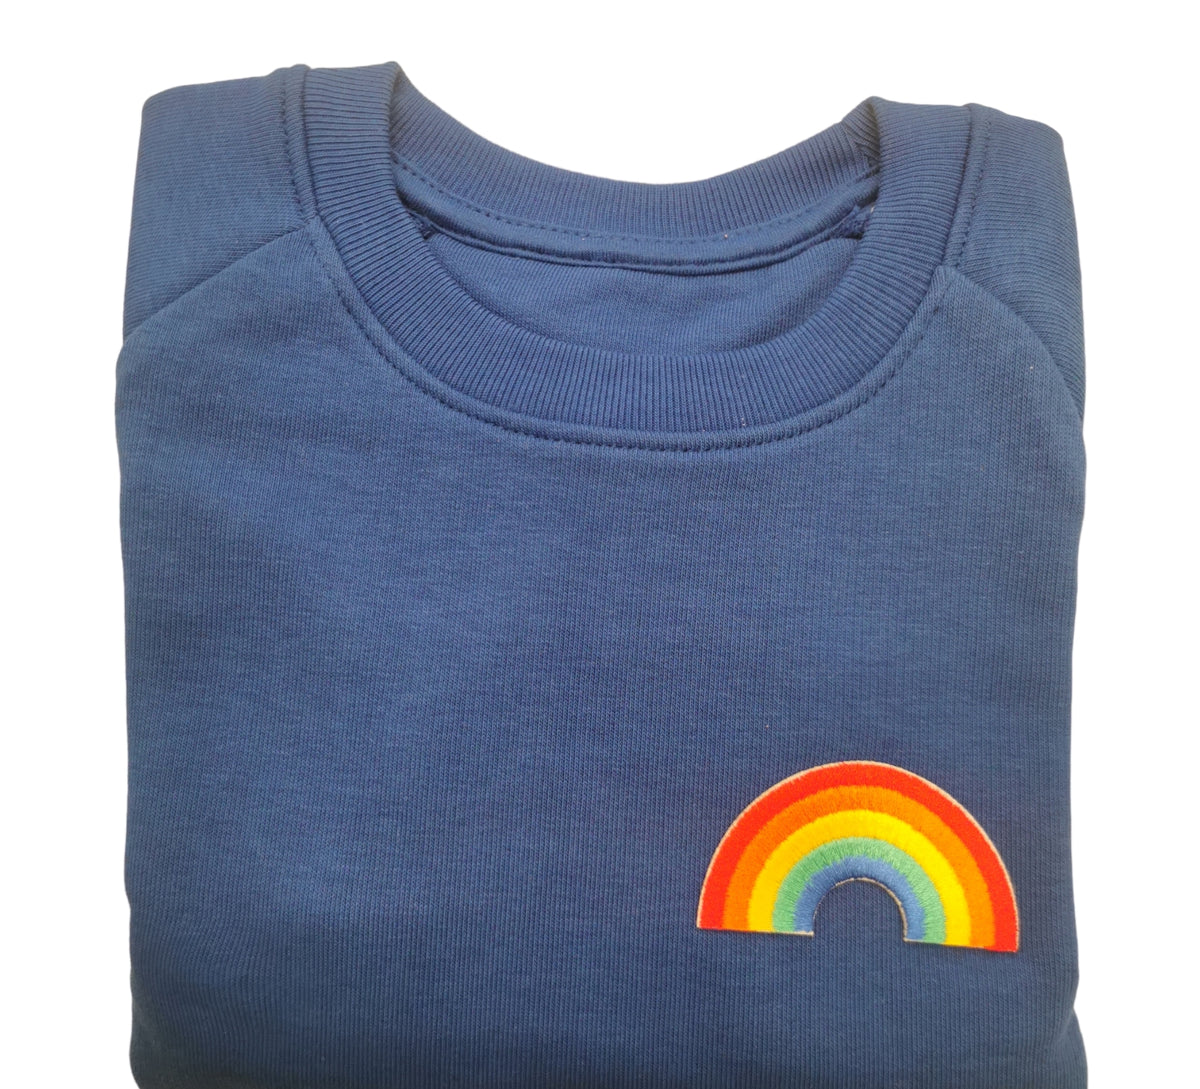 Sweatshirt in organic cotton with rainbow / blue patch